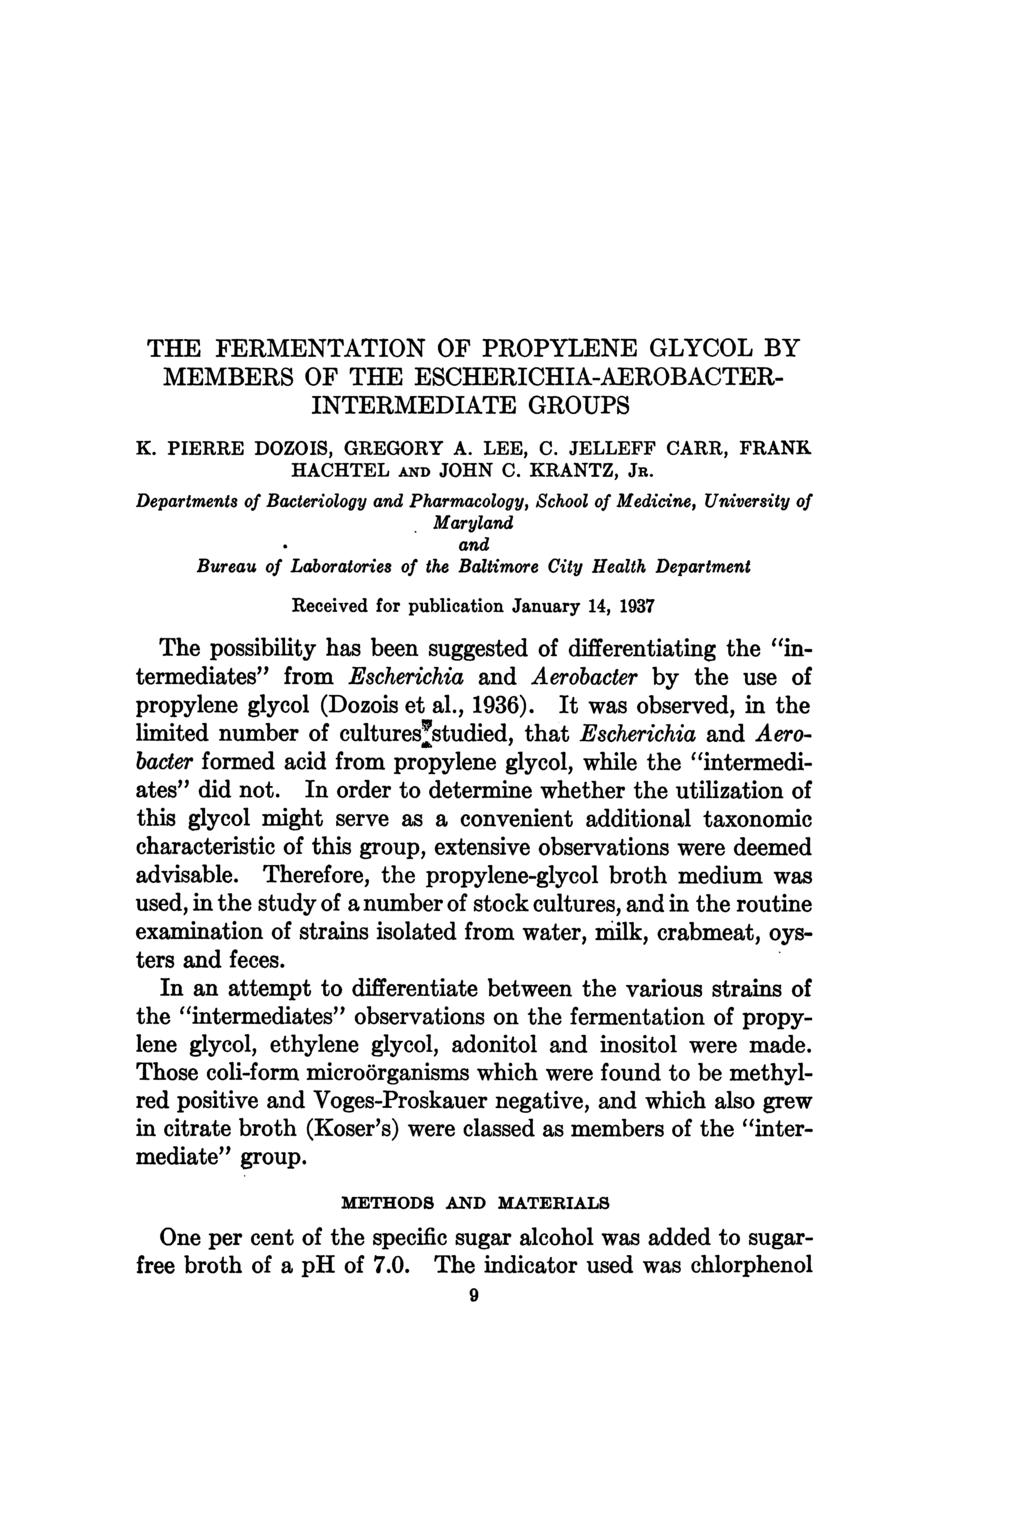 THE FERMENTATION OF PROPYLENE GLYCOL BY MEMBERS OF THE ESCHERICHIA-AEROBACTER- INTERMEDIATE GROUPS K. PIERRE DOZOIS, GREGORY A. LEE, C. JELLEFF CARR, FRANK HACHTEL AND JOHN C. KRANTZ, JR.